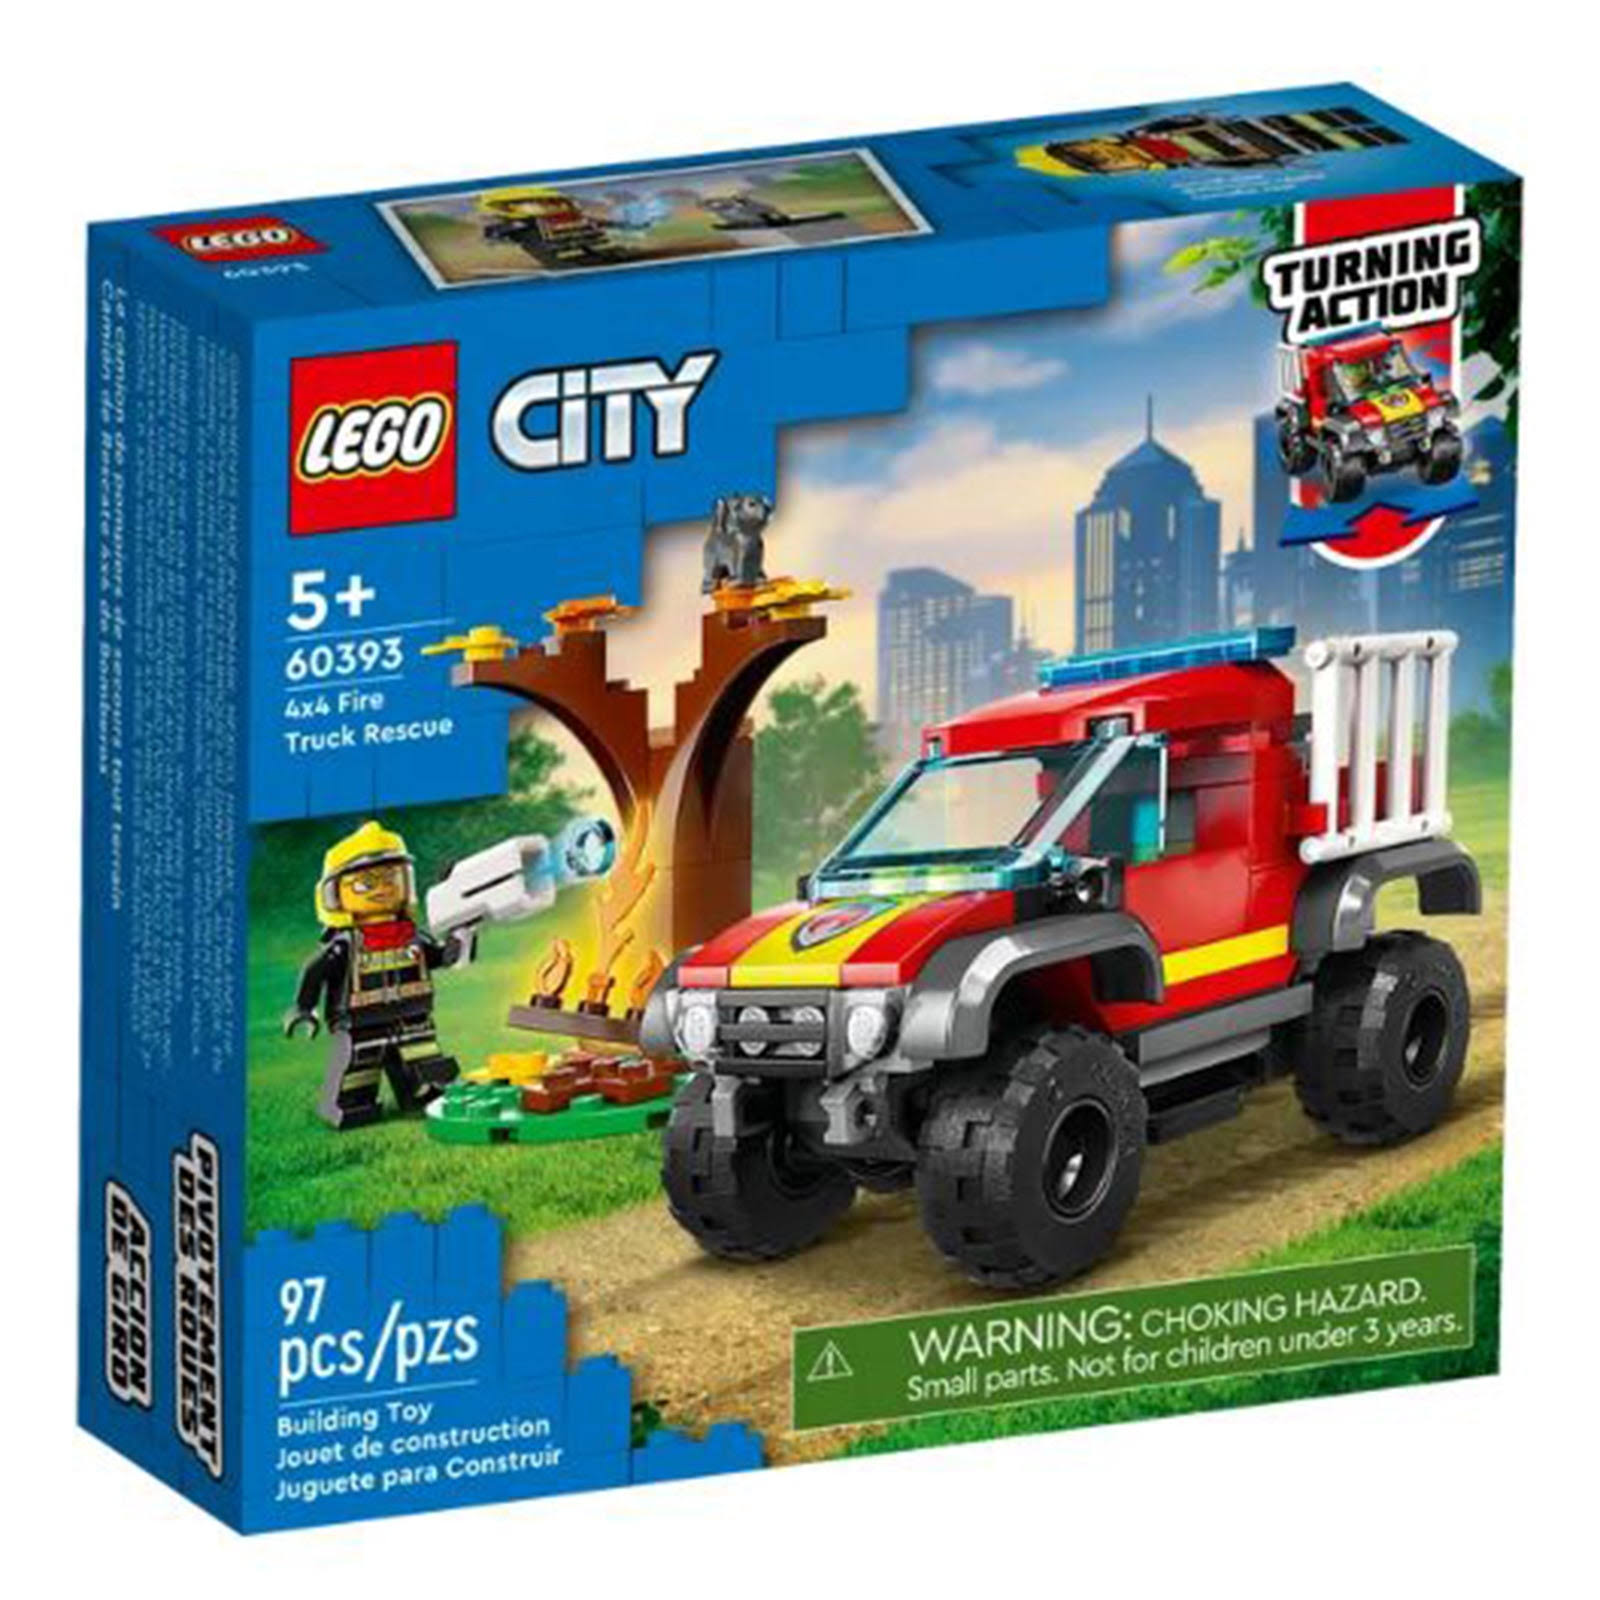 Lego 60393 City 4x4 Fire Truck Rescue